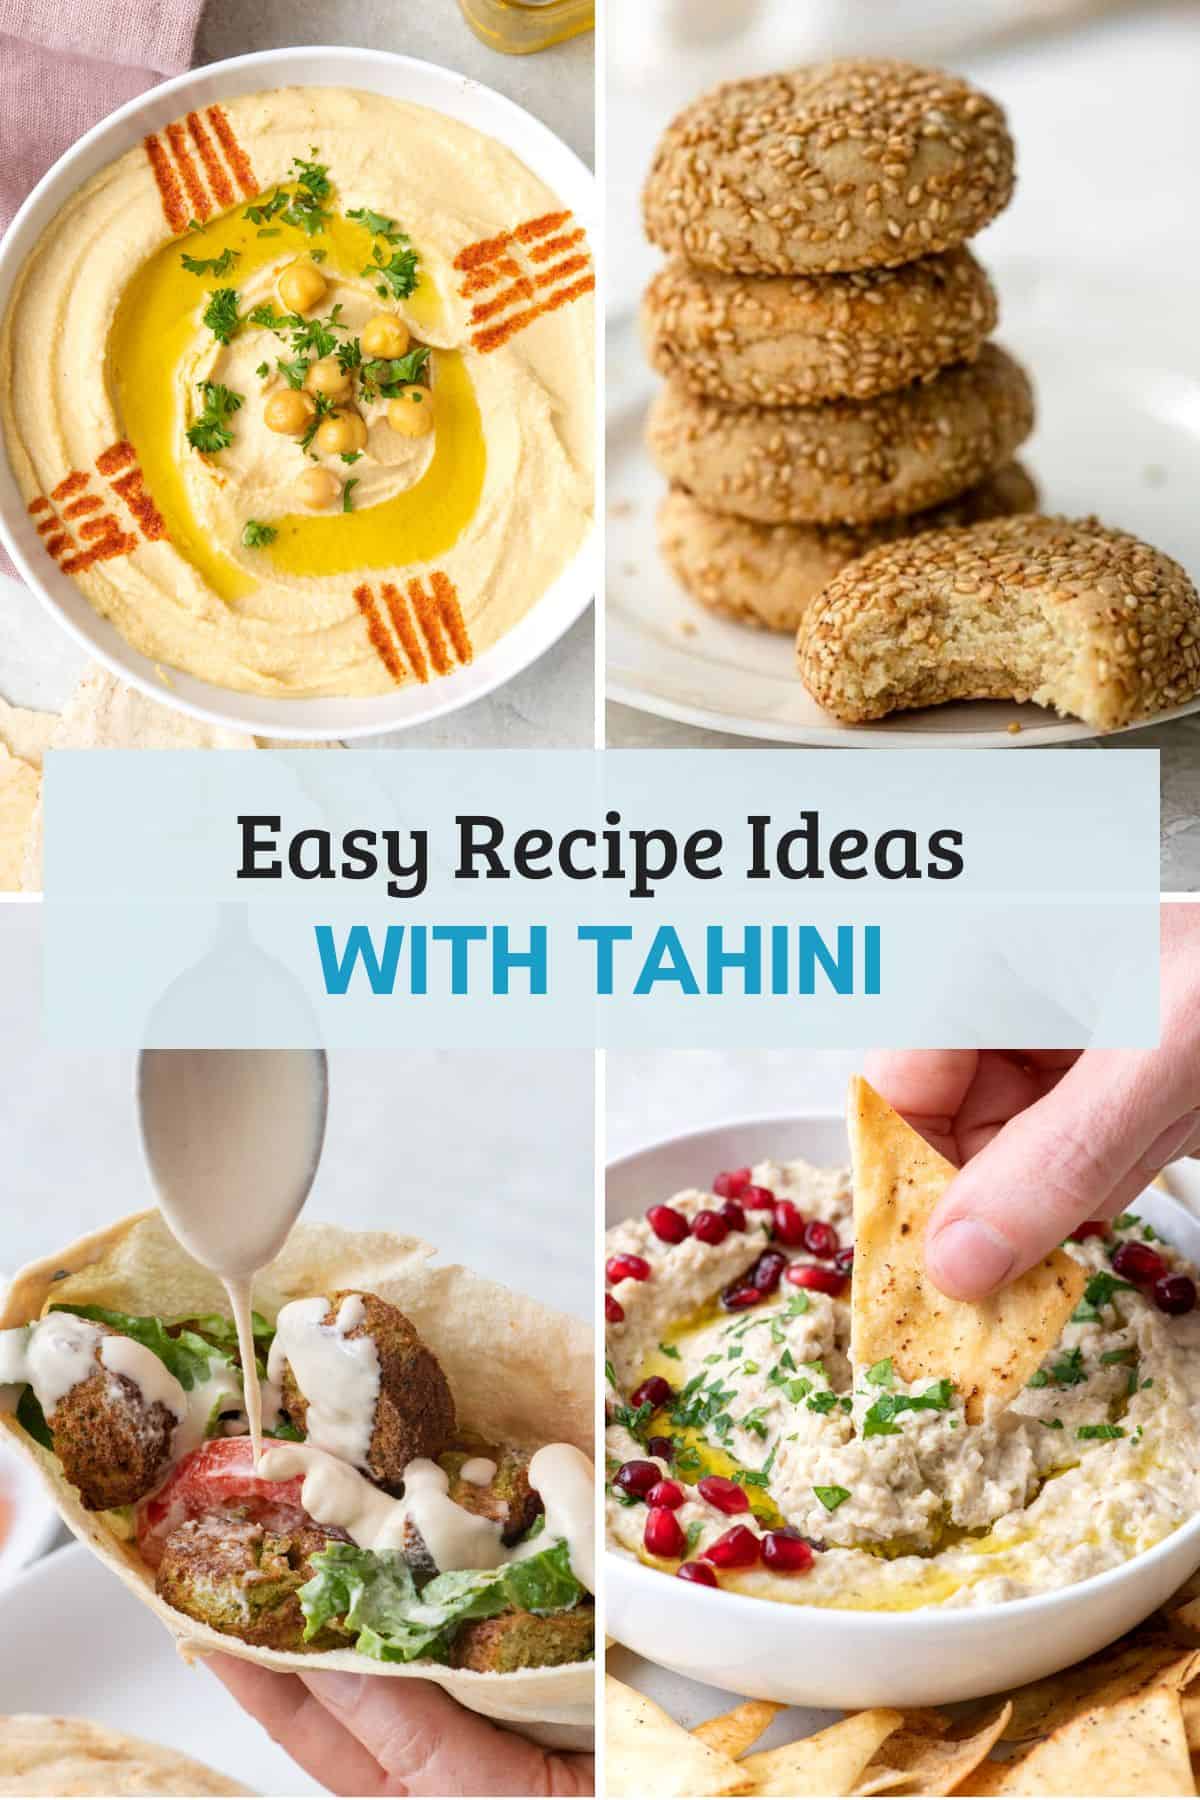 How to Make Tahini (Easy 2-Ingredient Recipe)